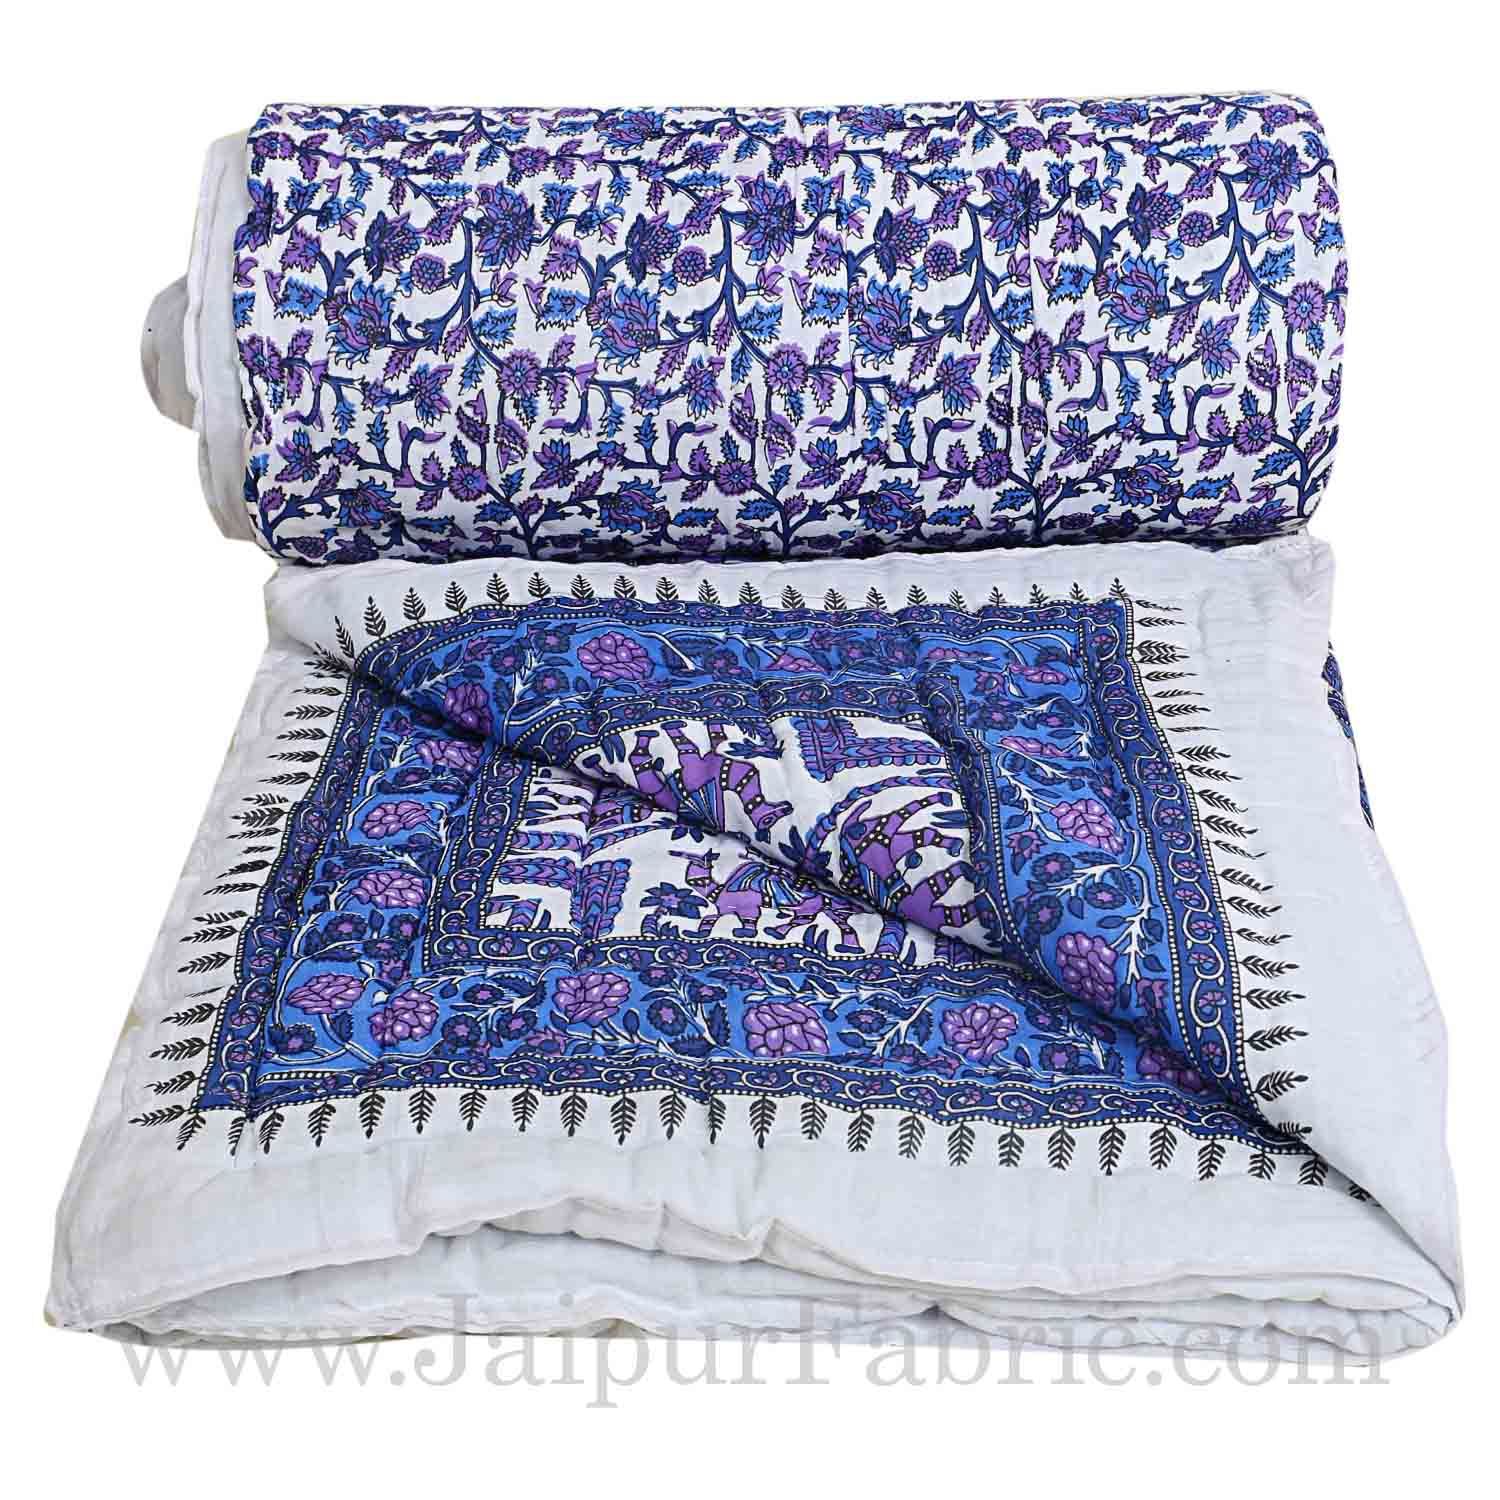 Double Bed Jaipur Razai (Quilt) Blue Pattern Camel  Mughal Print